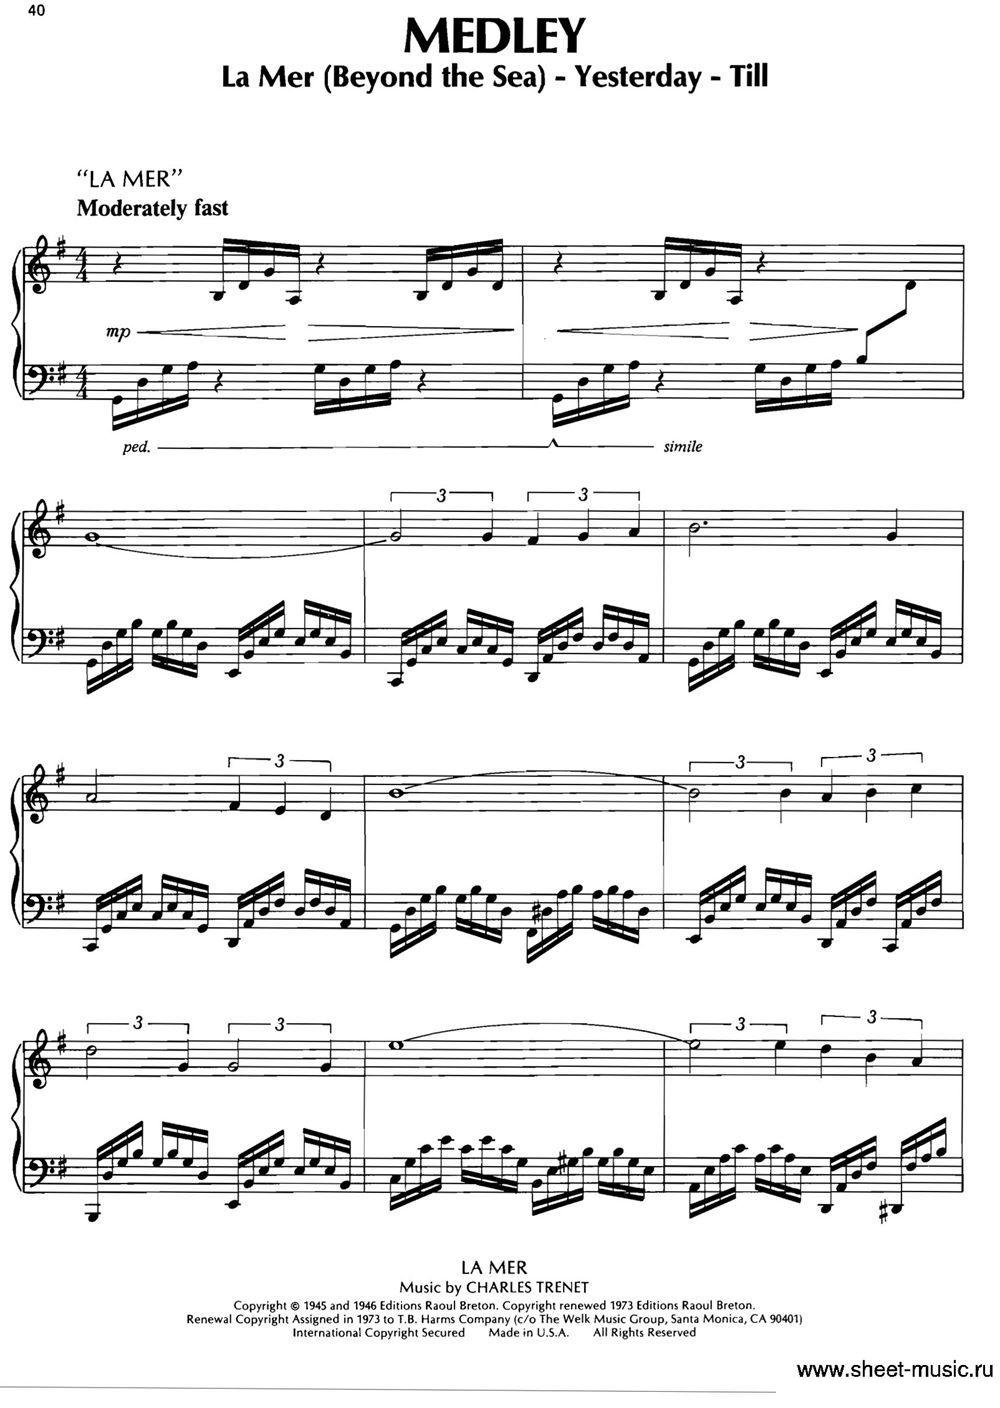 MEDLEY（La Mer（Beyond the Sea）-Yesterday-Till）钢琴曲谱（图1）